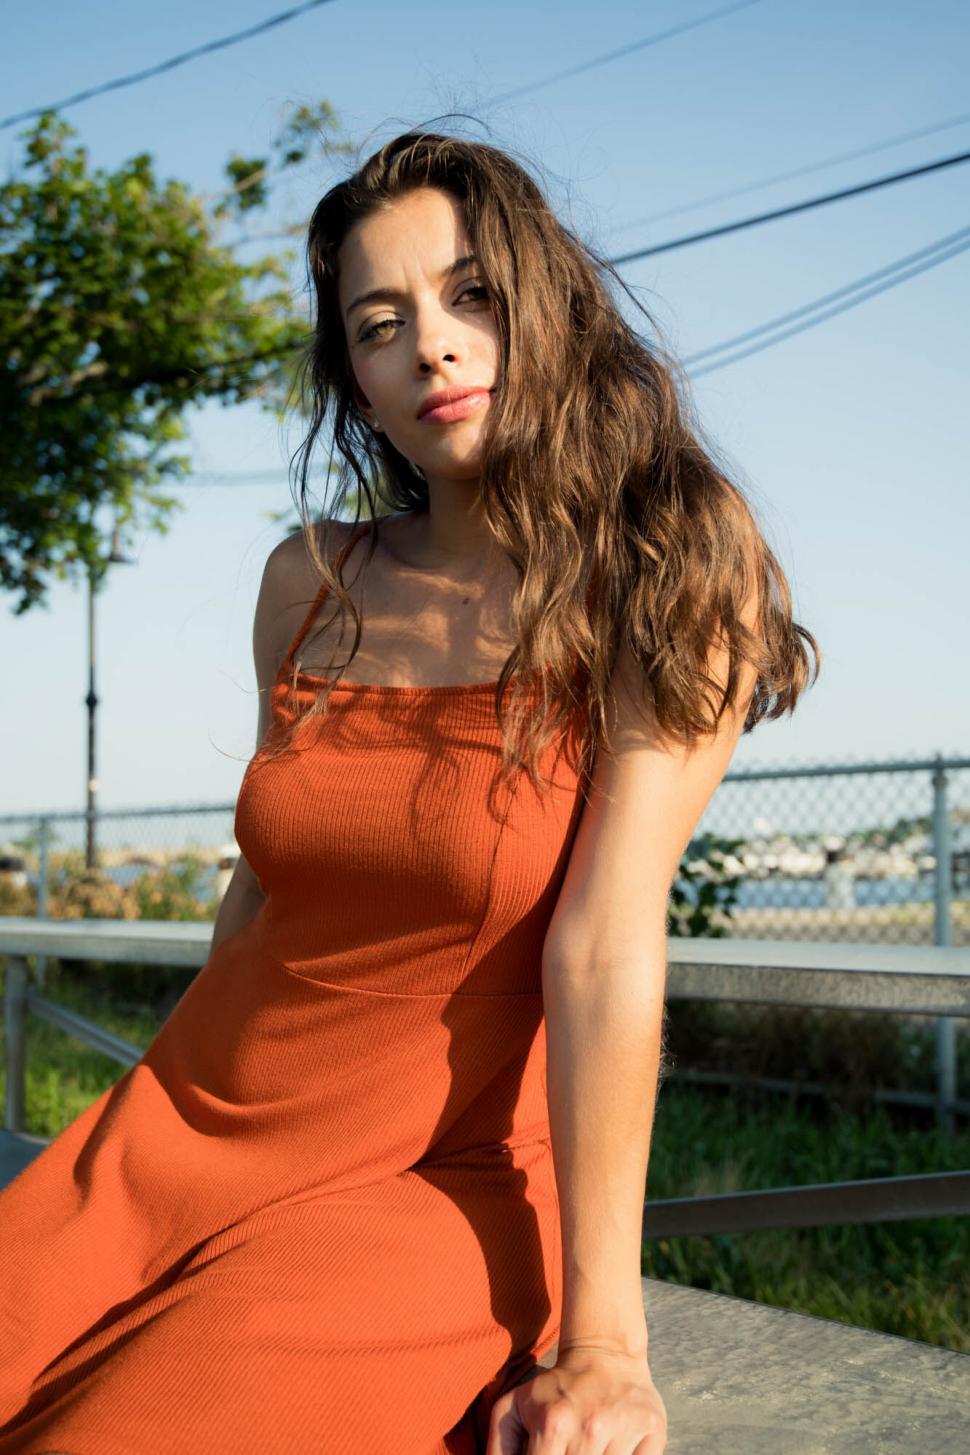 Free Image of Fashion Model in Orange Dress Outdoors 